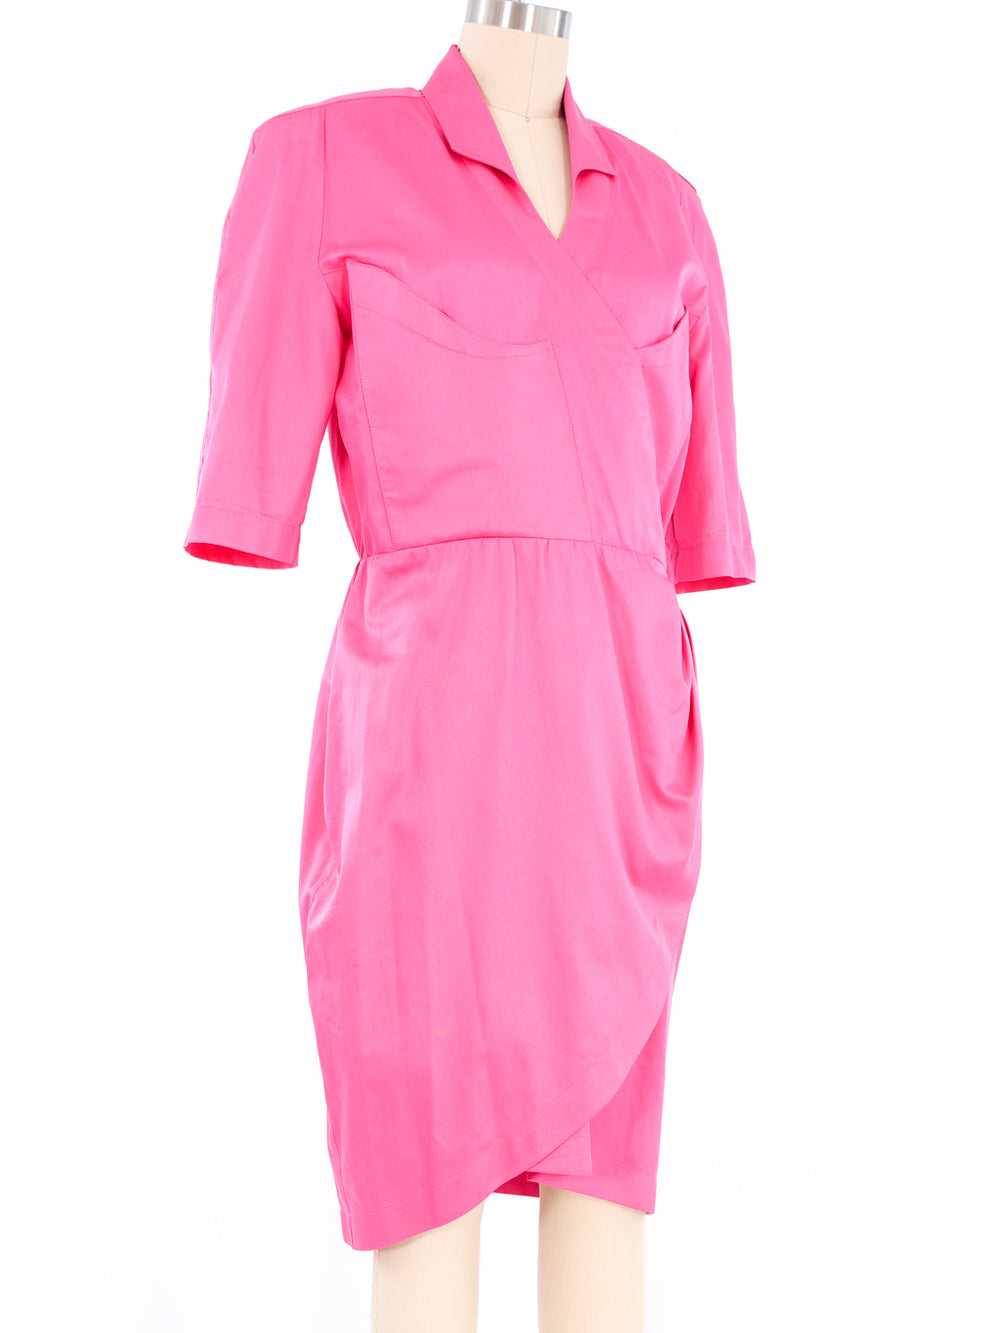 Thierry Mugler Pink Wrap Front Dress - image 3